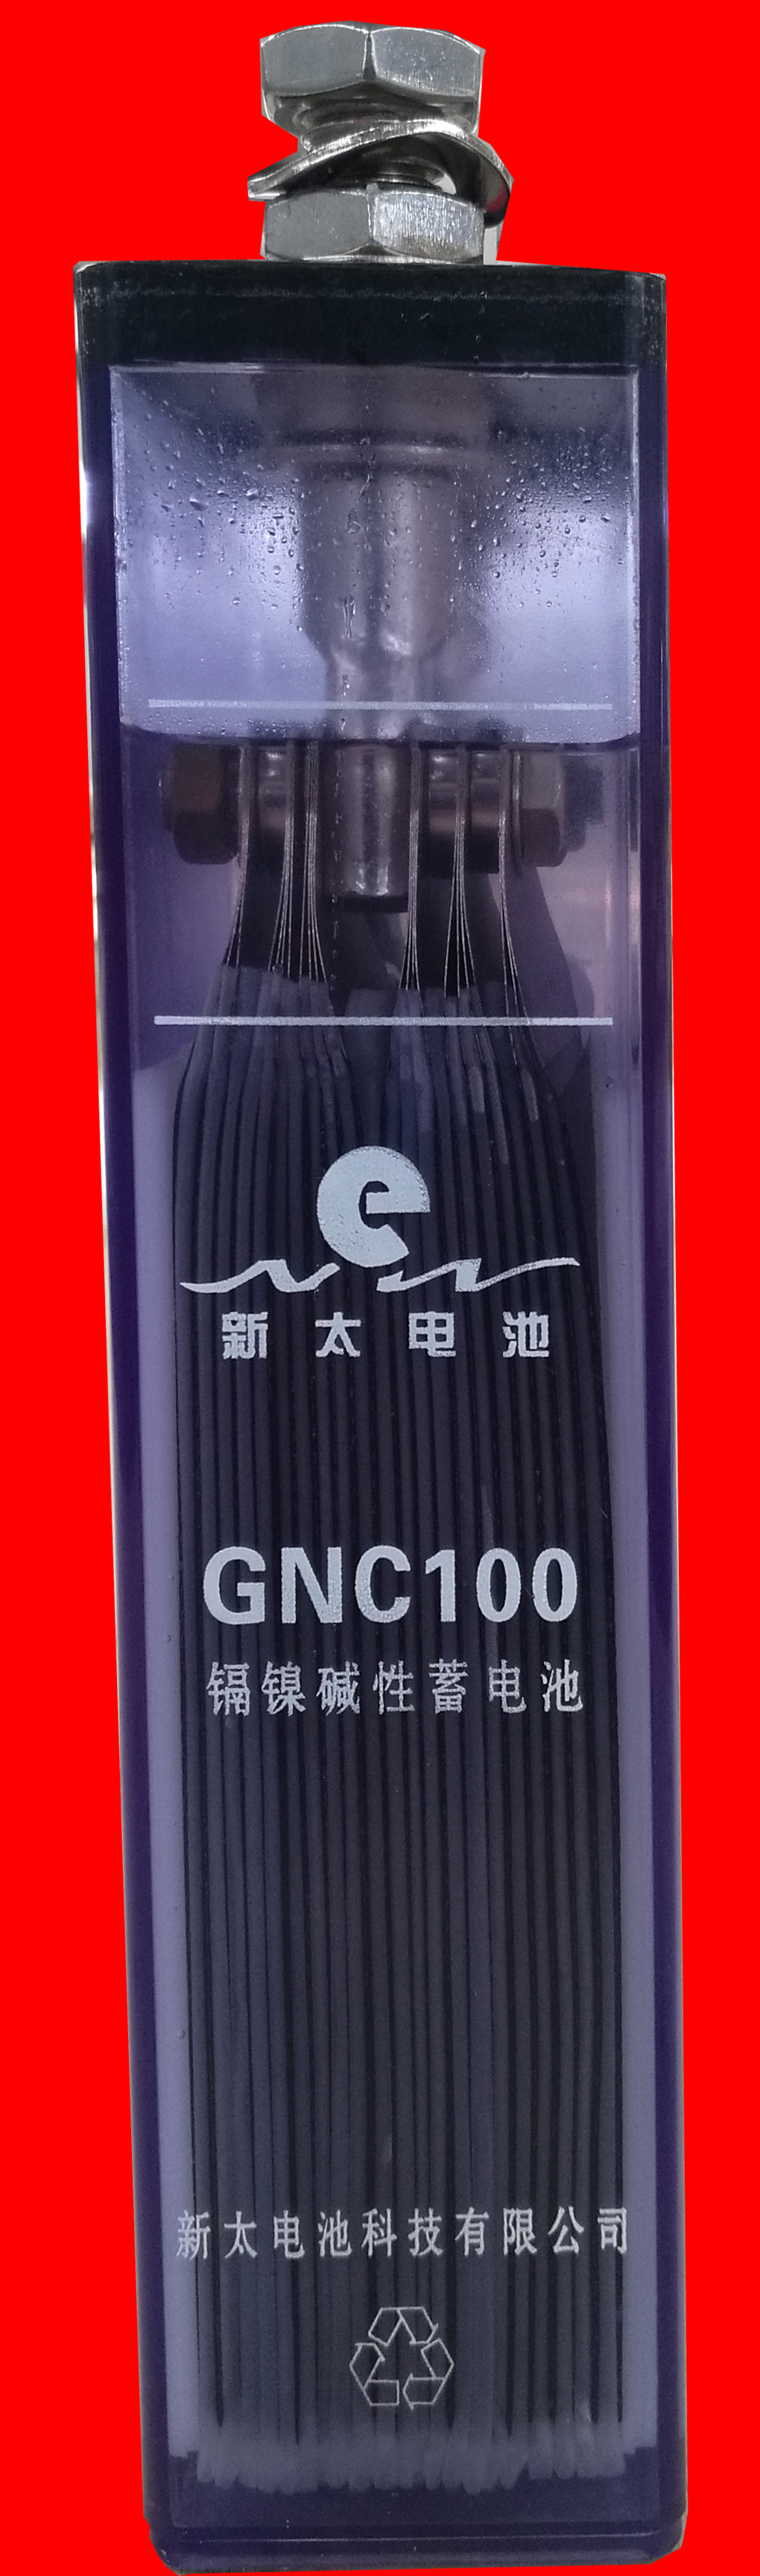 GNC100(KPX100)超高倍率镉镍蓄电池